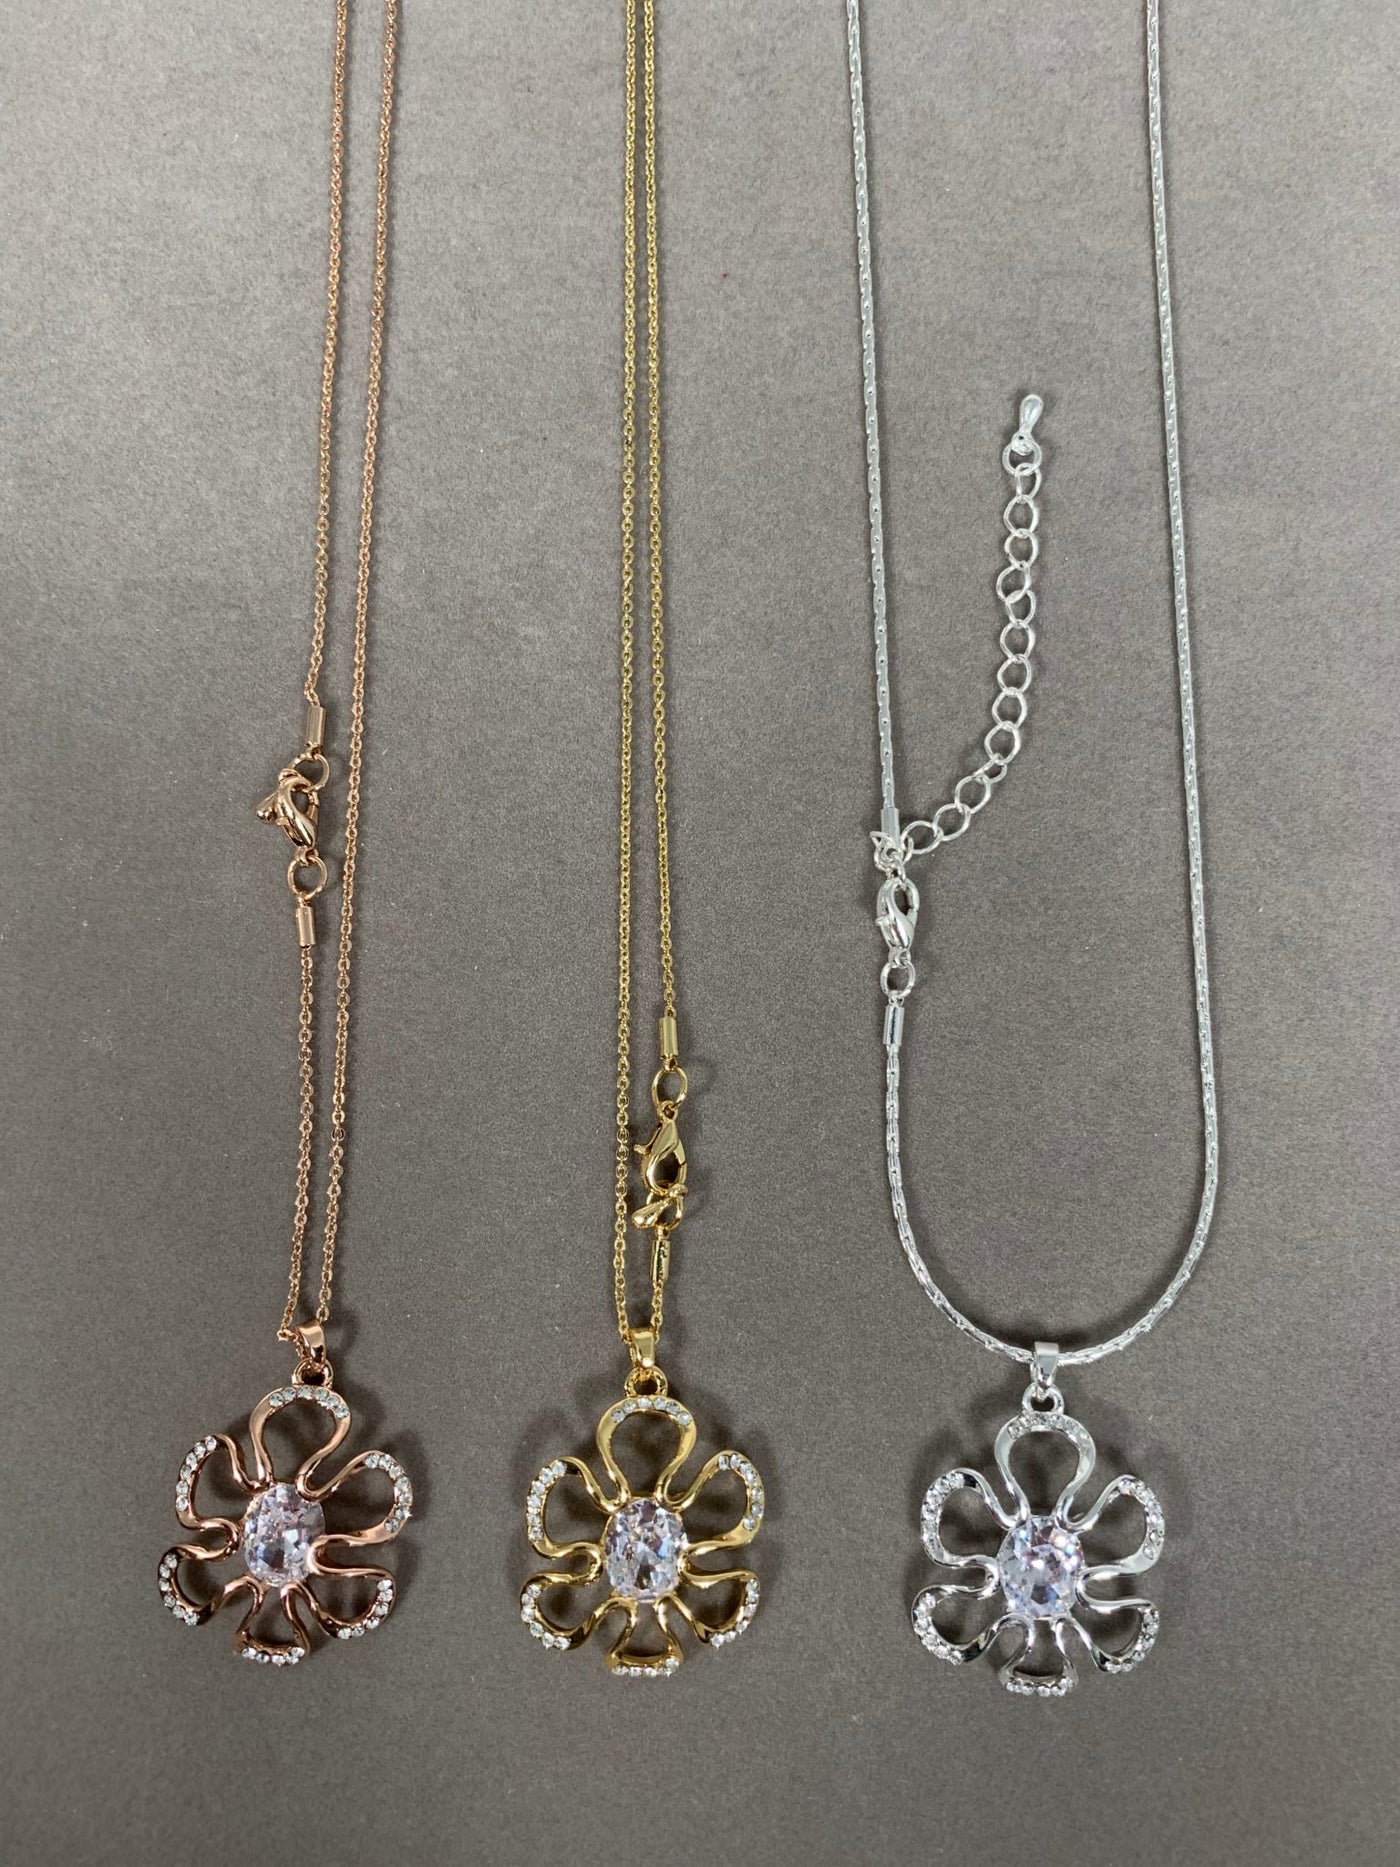 Rose Gold Tone Crystal Flower Pendant Necklace